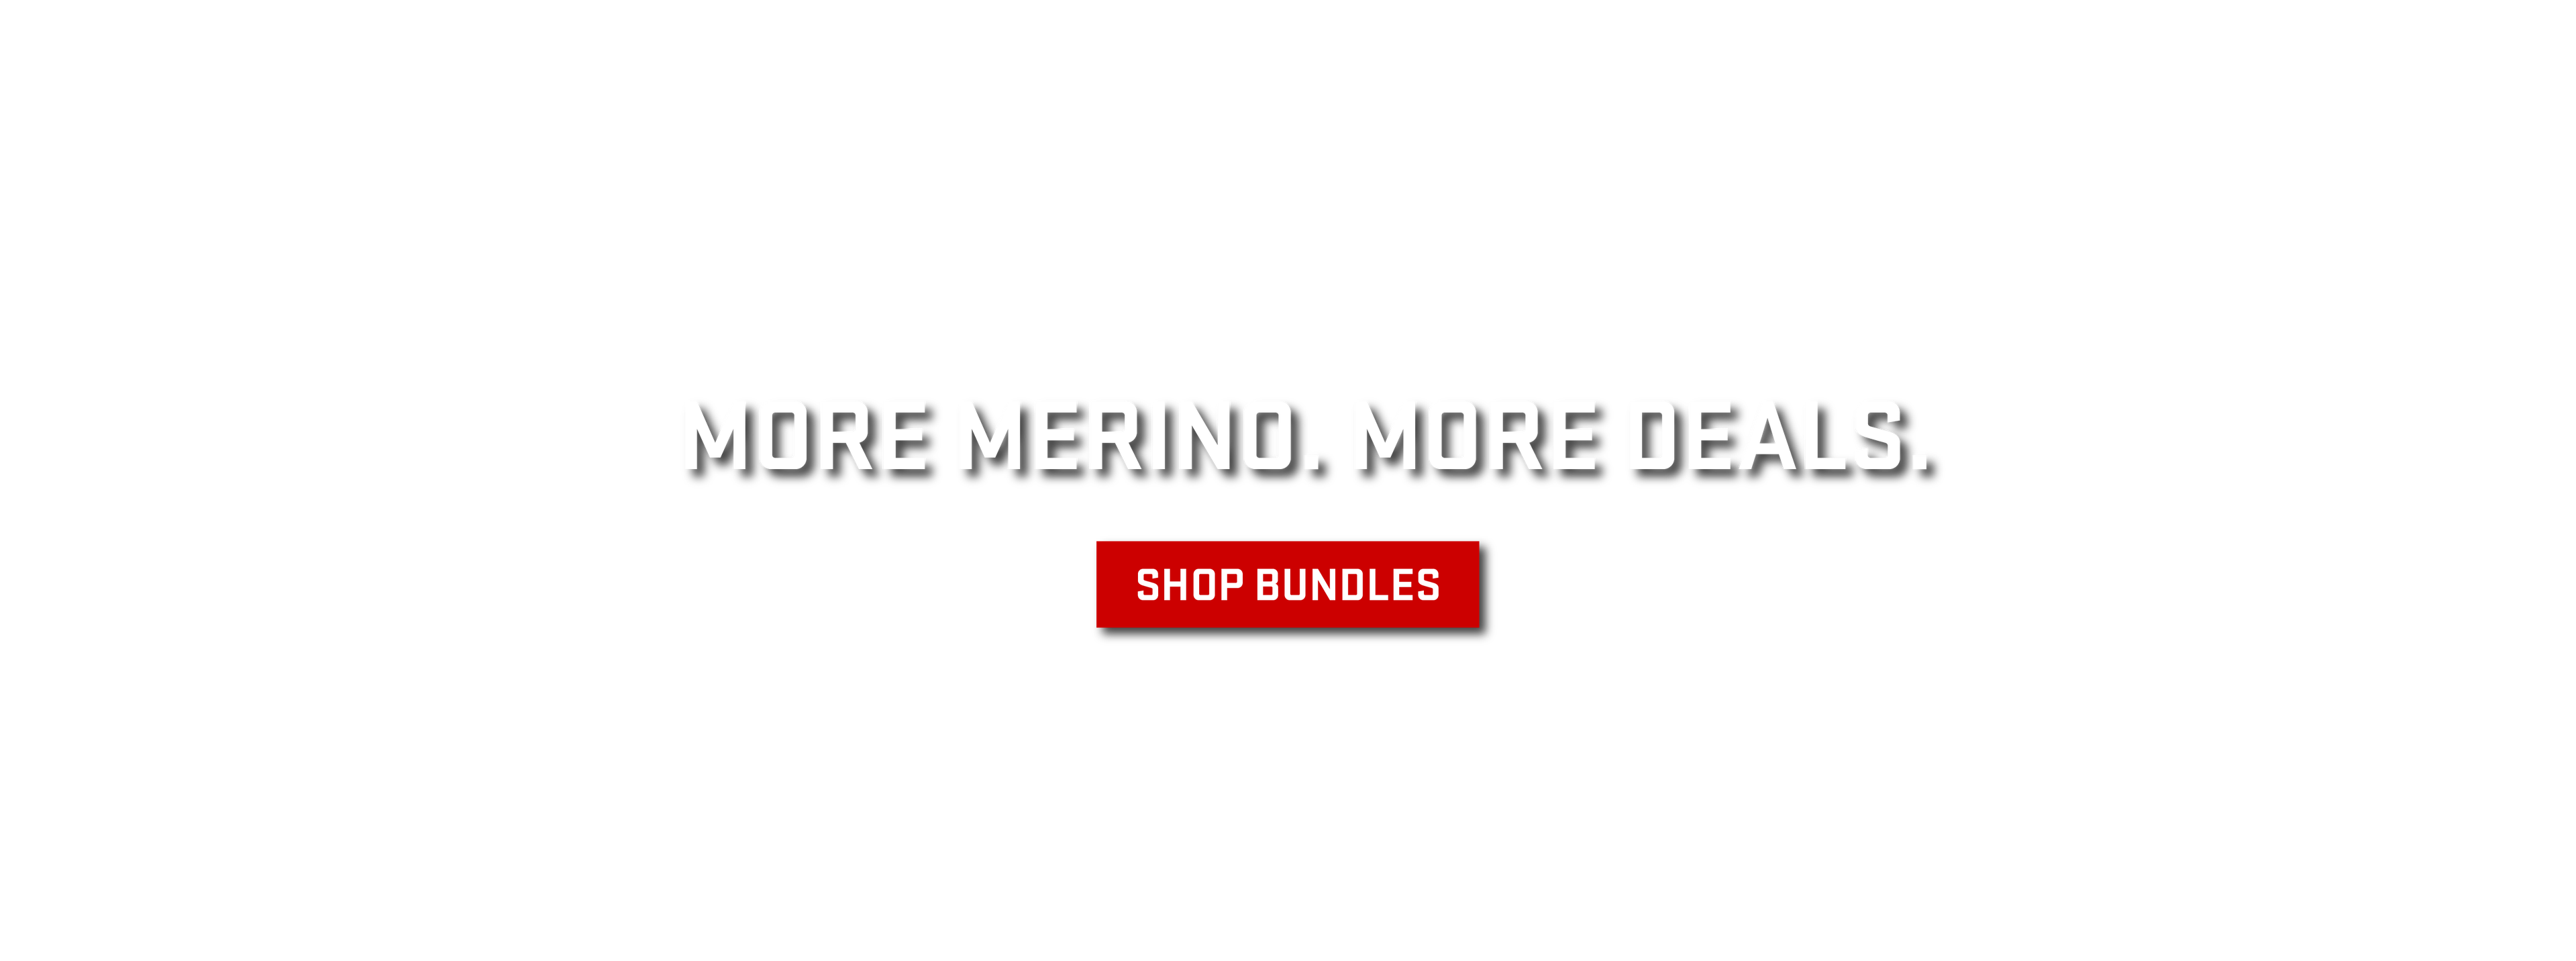 More Merino. More Deals. Shop Bundles